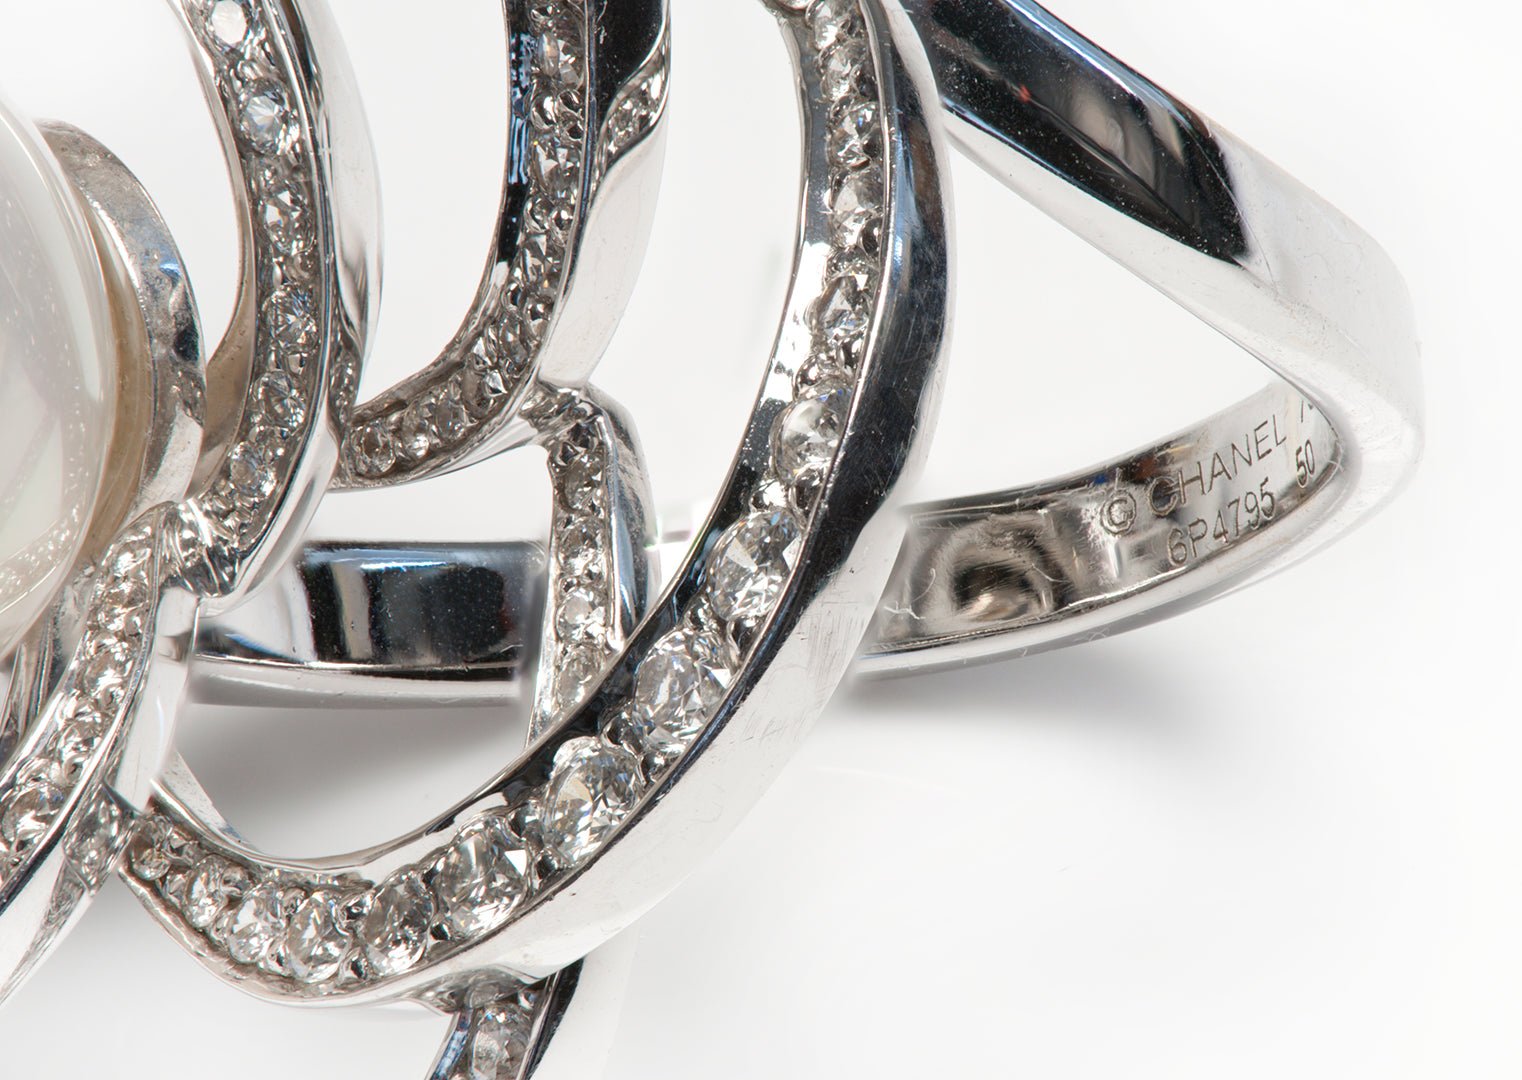 Chanel 18K Gold Pearl Diamond Fil de Camelia Ring - DSF Antique Jewelry